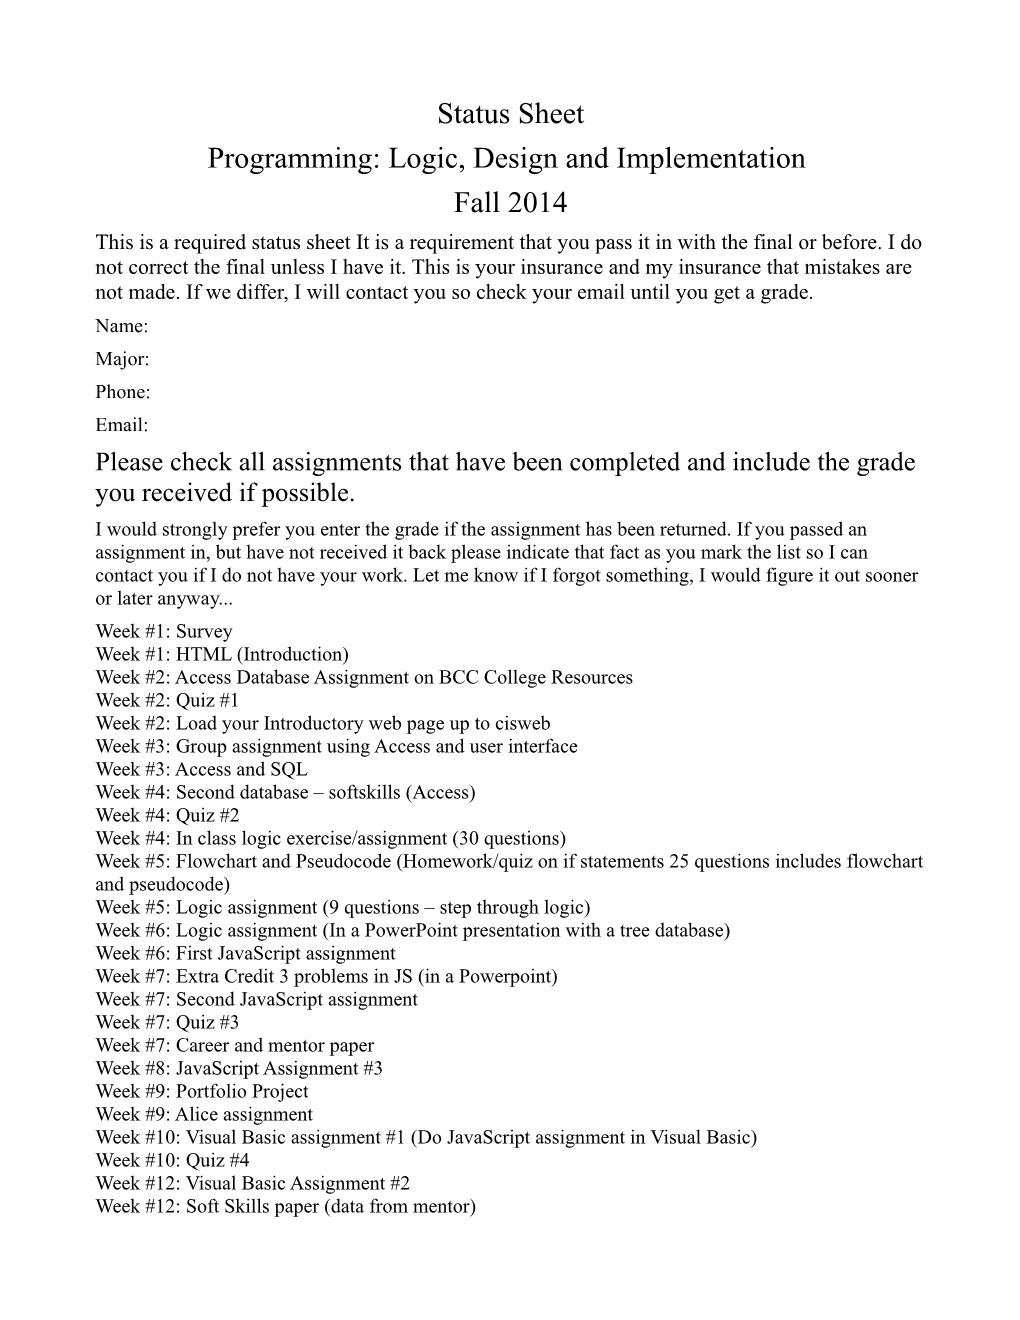 Programming: Logic, Design and Implementation